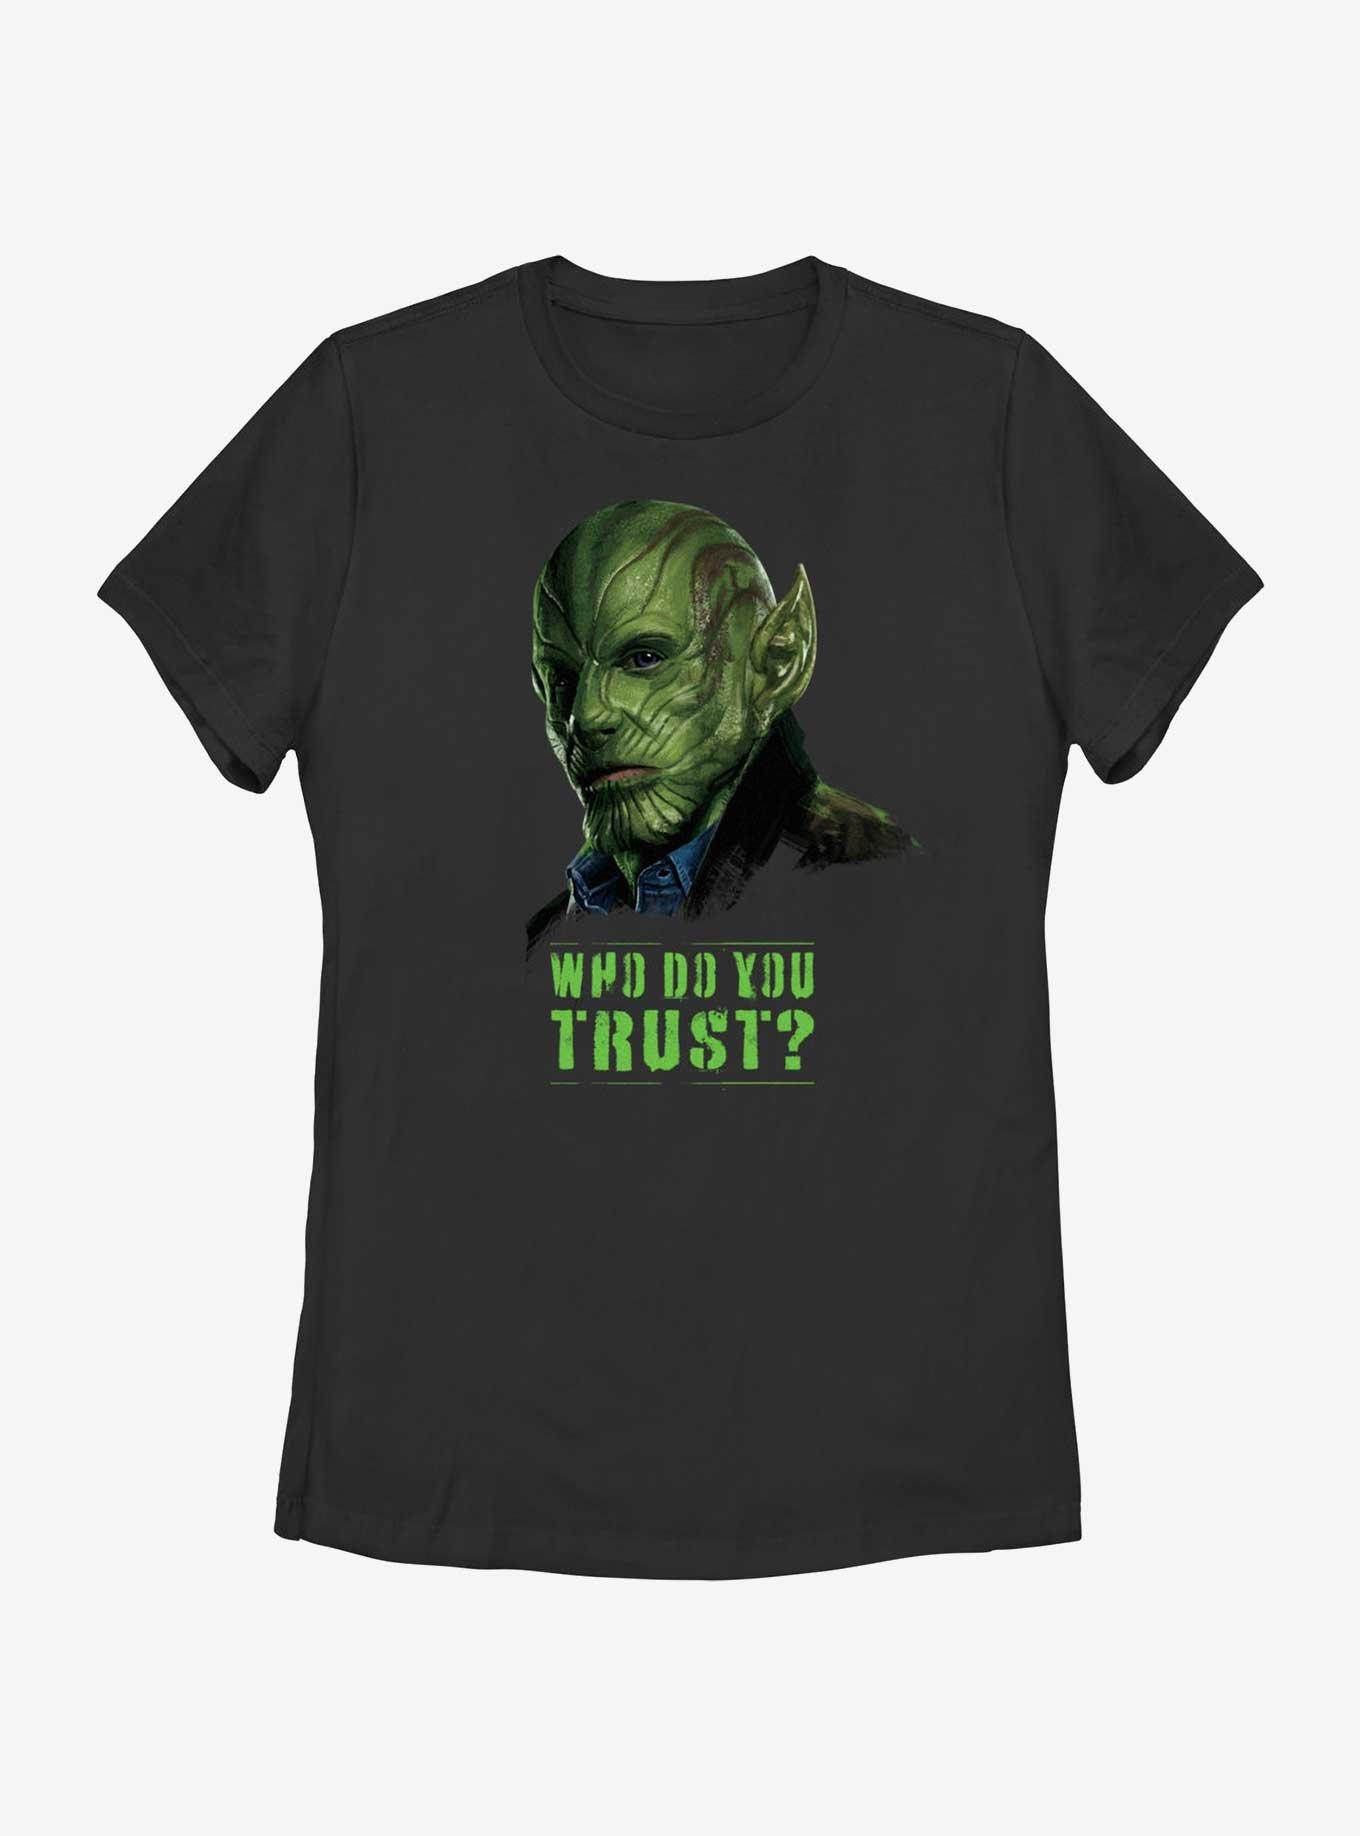 Marvel Secret Invasion Skrull Talos Who Do You Trust Poster Womens T-Shirt, BLACK, hi-res